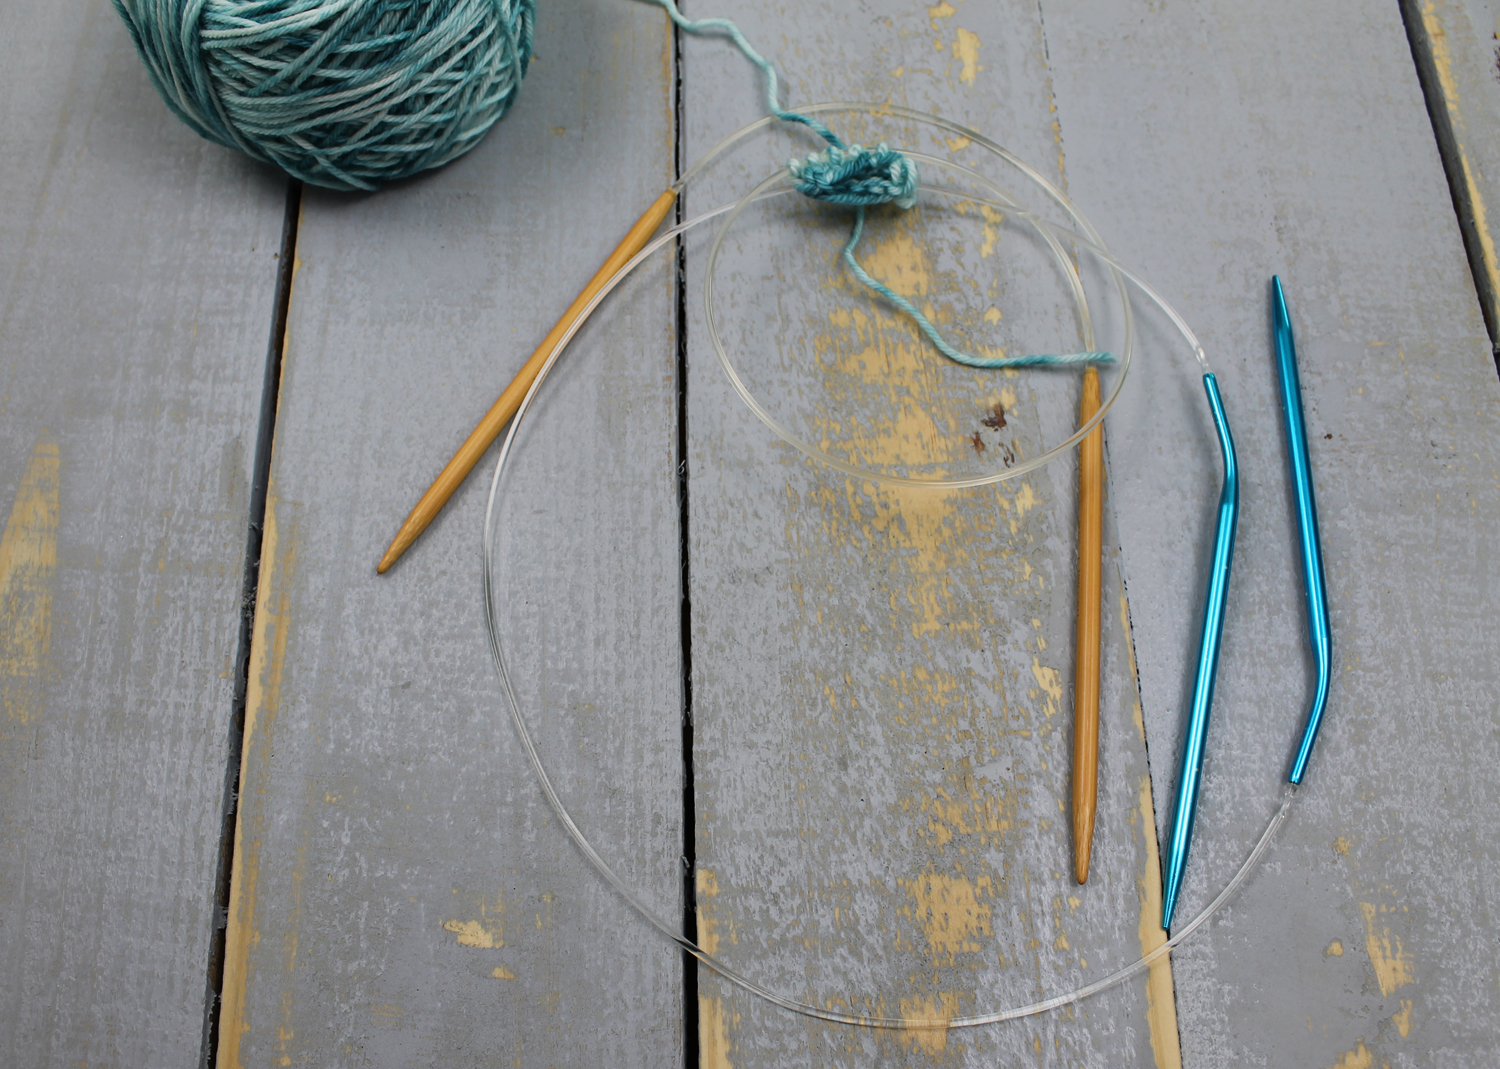 Knitting on two circular needles